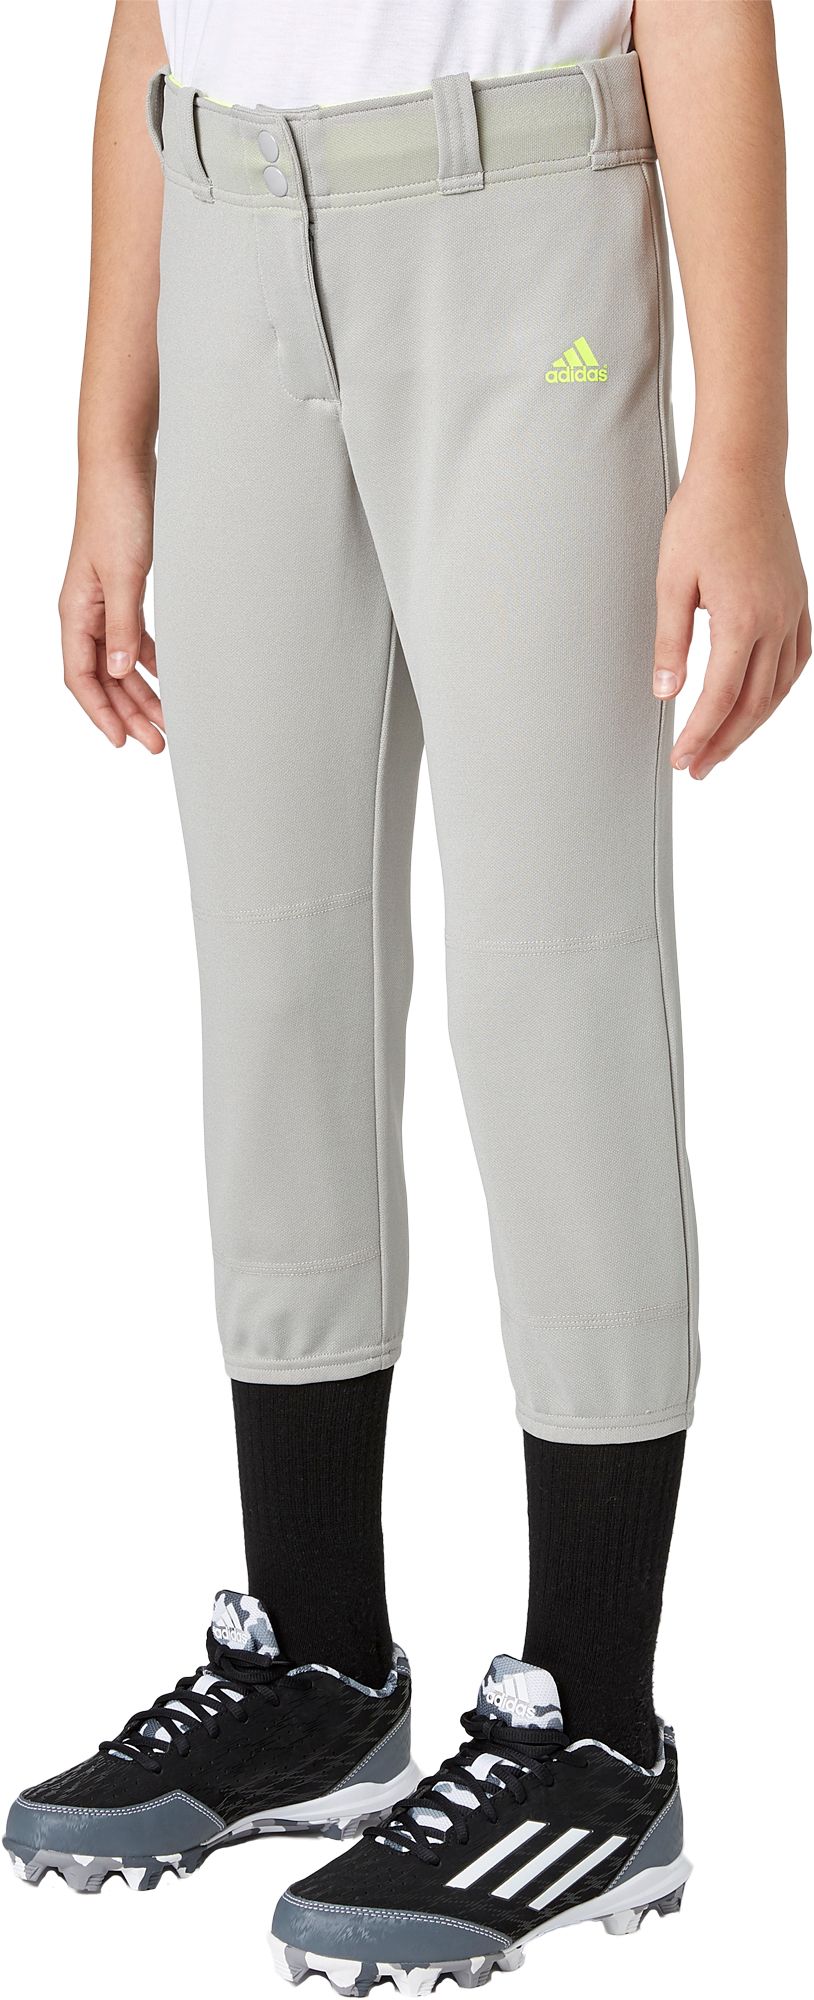 adidas women's softball pants